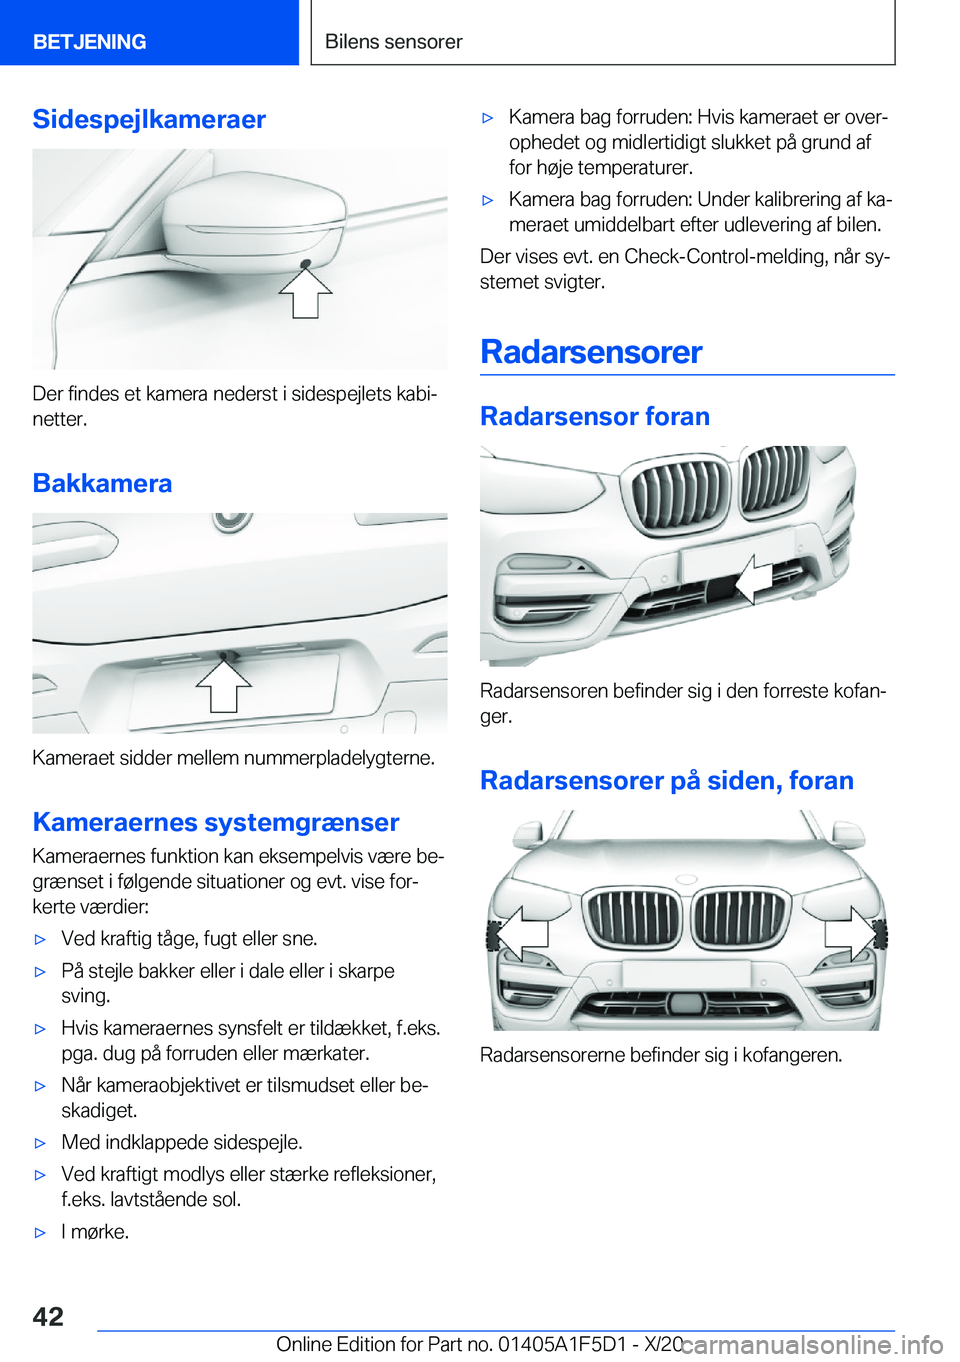 BMW X4 M 2021  InstruktionsbØger (in Danish) �S�i�d�e�s�p�e�j�l�k�a�m�e�r�a�e�r
�D�e�r��f�i�n�d�e�s��e�t��k�a�m�e�r�a��n�e�d�e�r�s�t��i��s�i�d�e�s�p�e�j�l�e�t�s��k�a�b�ij
�n�e�t�t�e�r�.
�B�a�k�k�a�m�e�r�a
�K�a�m�e�r�a�e�t��s�i�d�d�e�r�